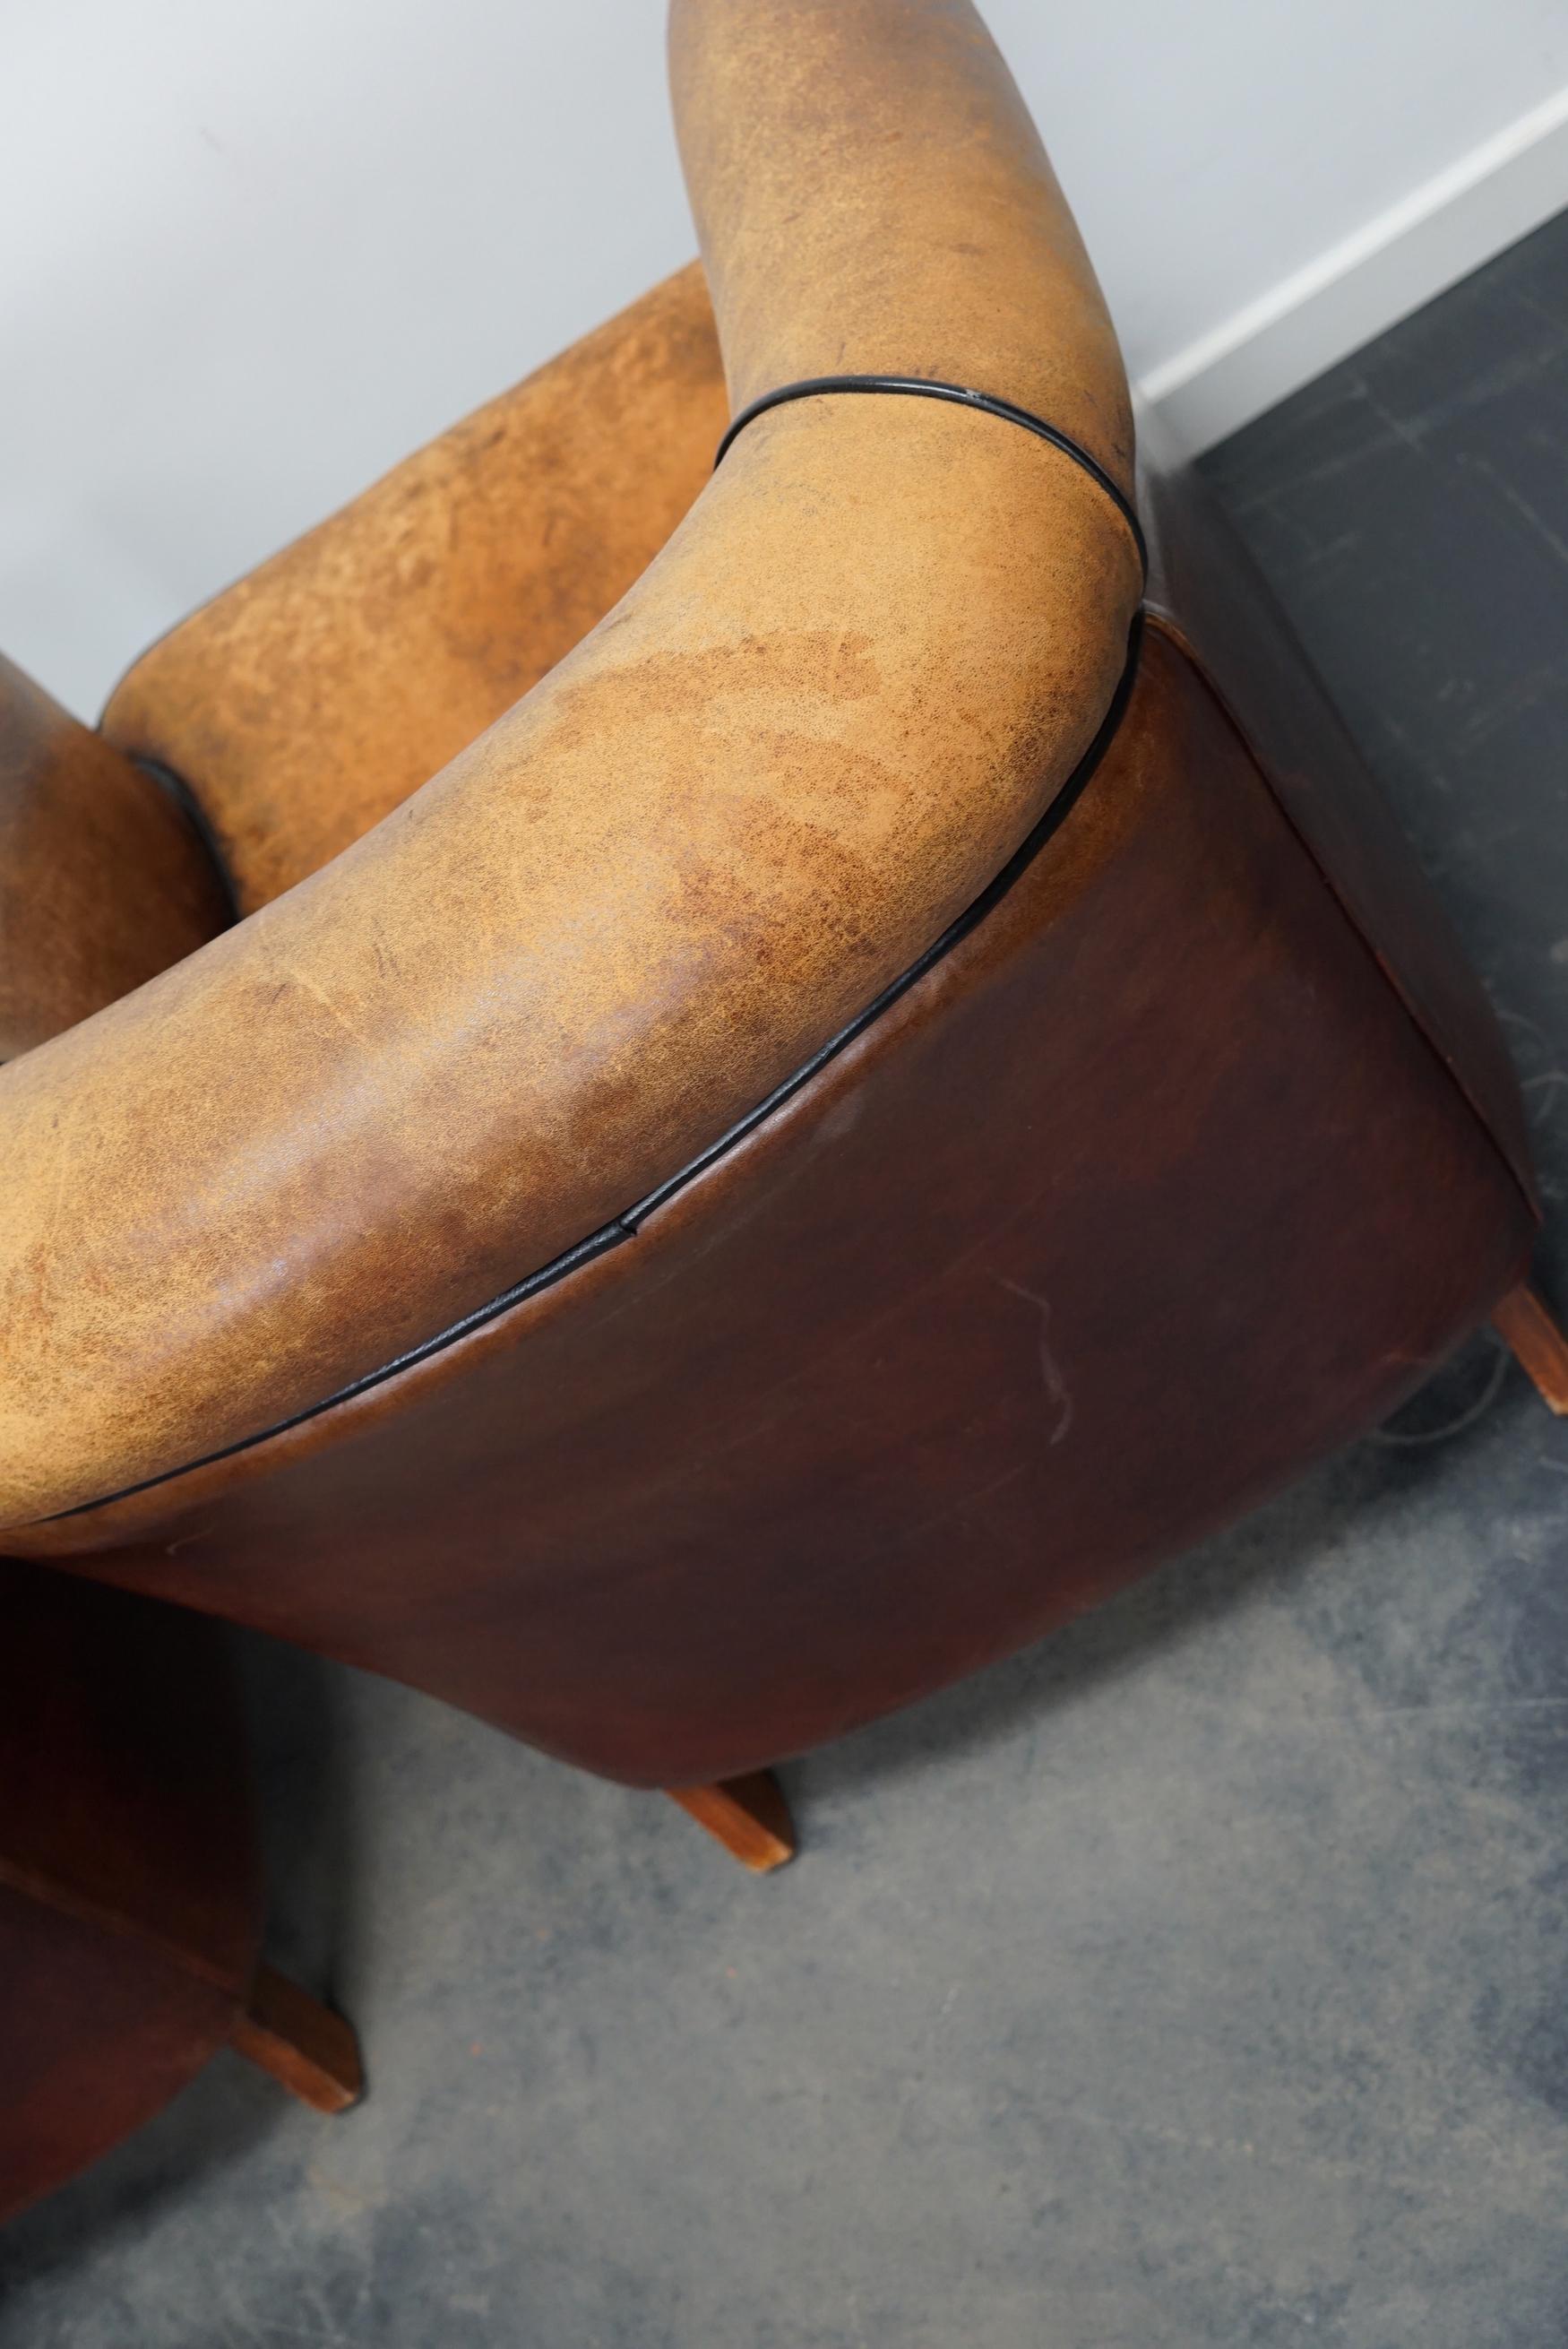 Vintage Dutch Cognac Leather Club Chairs, Set of 2 11